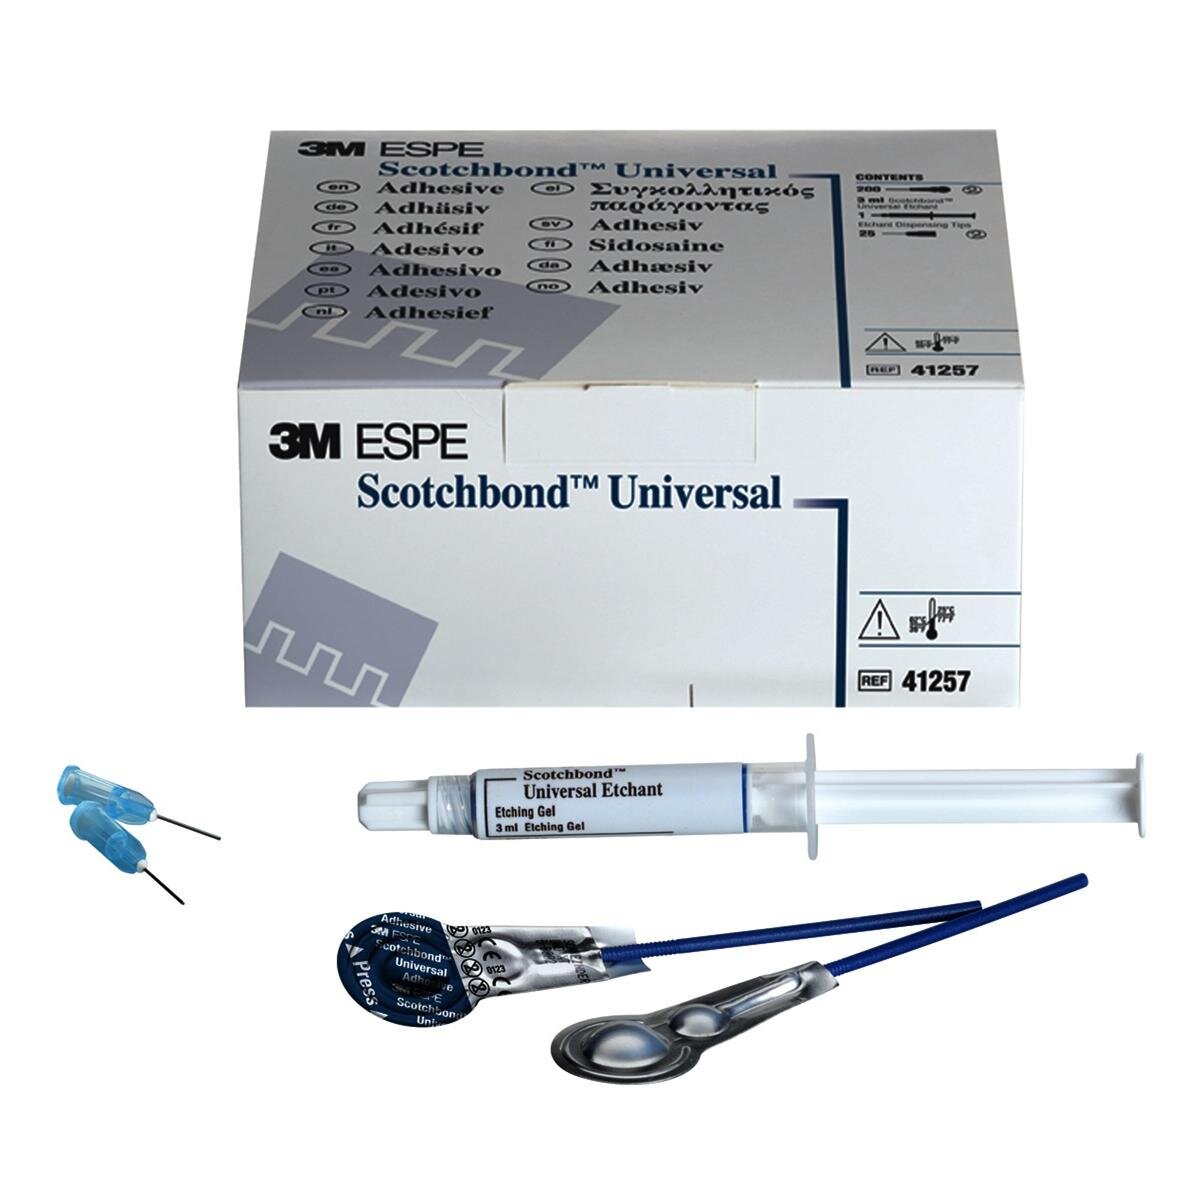 3m-espe-scotchbond-universal-adhesive-bulk-pack-200-unit-dose-applicators-41257